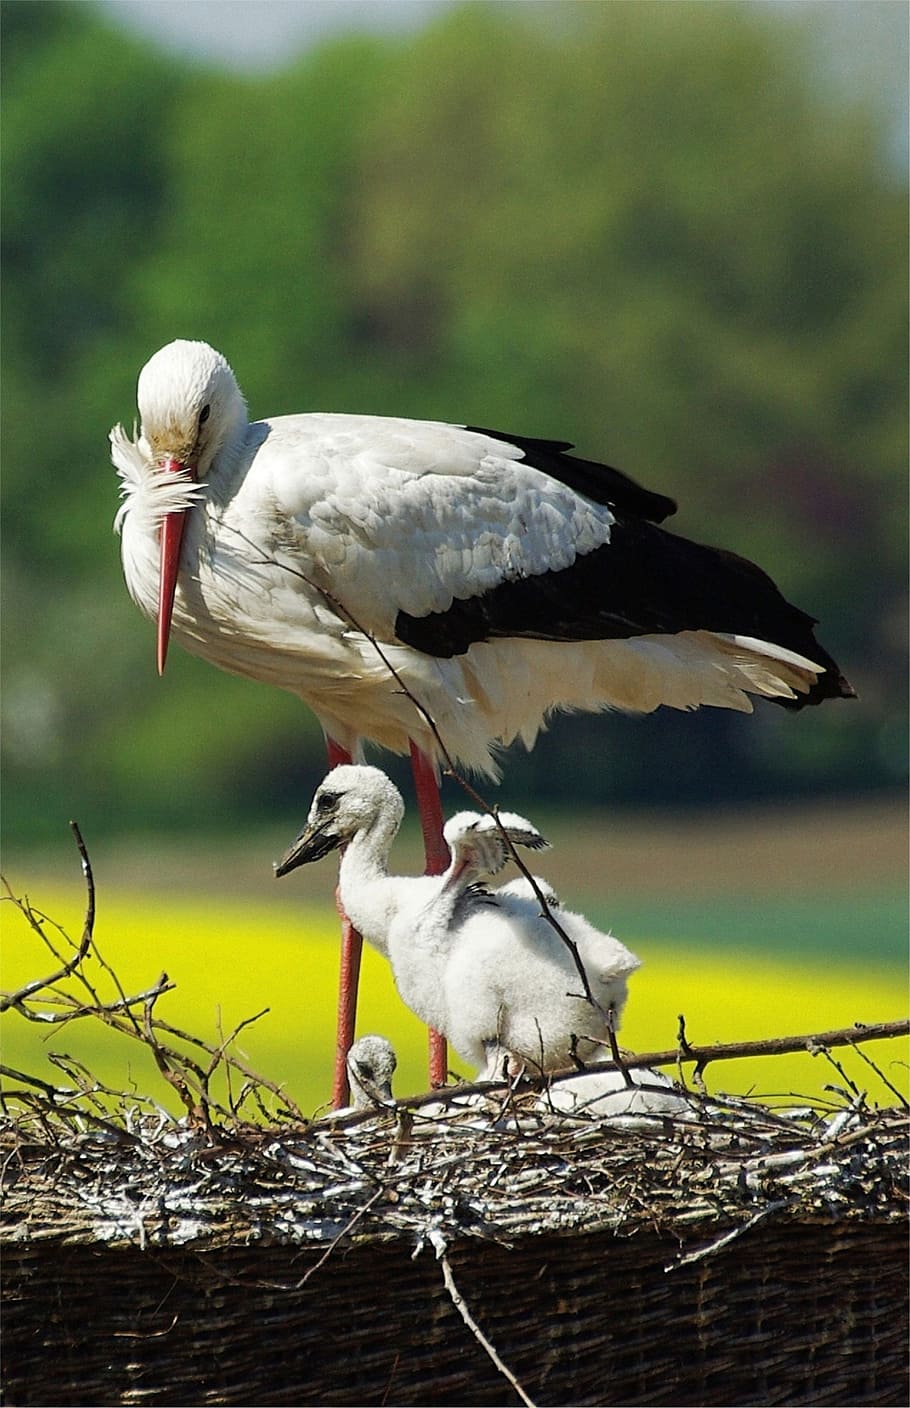 stork, young stork, storchennest, bird, vertebrate, animal themes, animal, animals in the wild, animal wildlife, group of animals